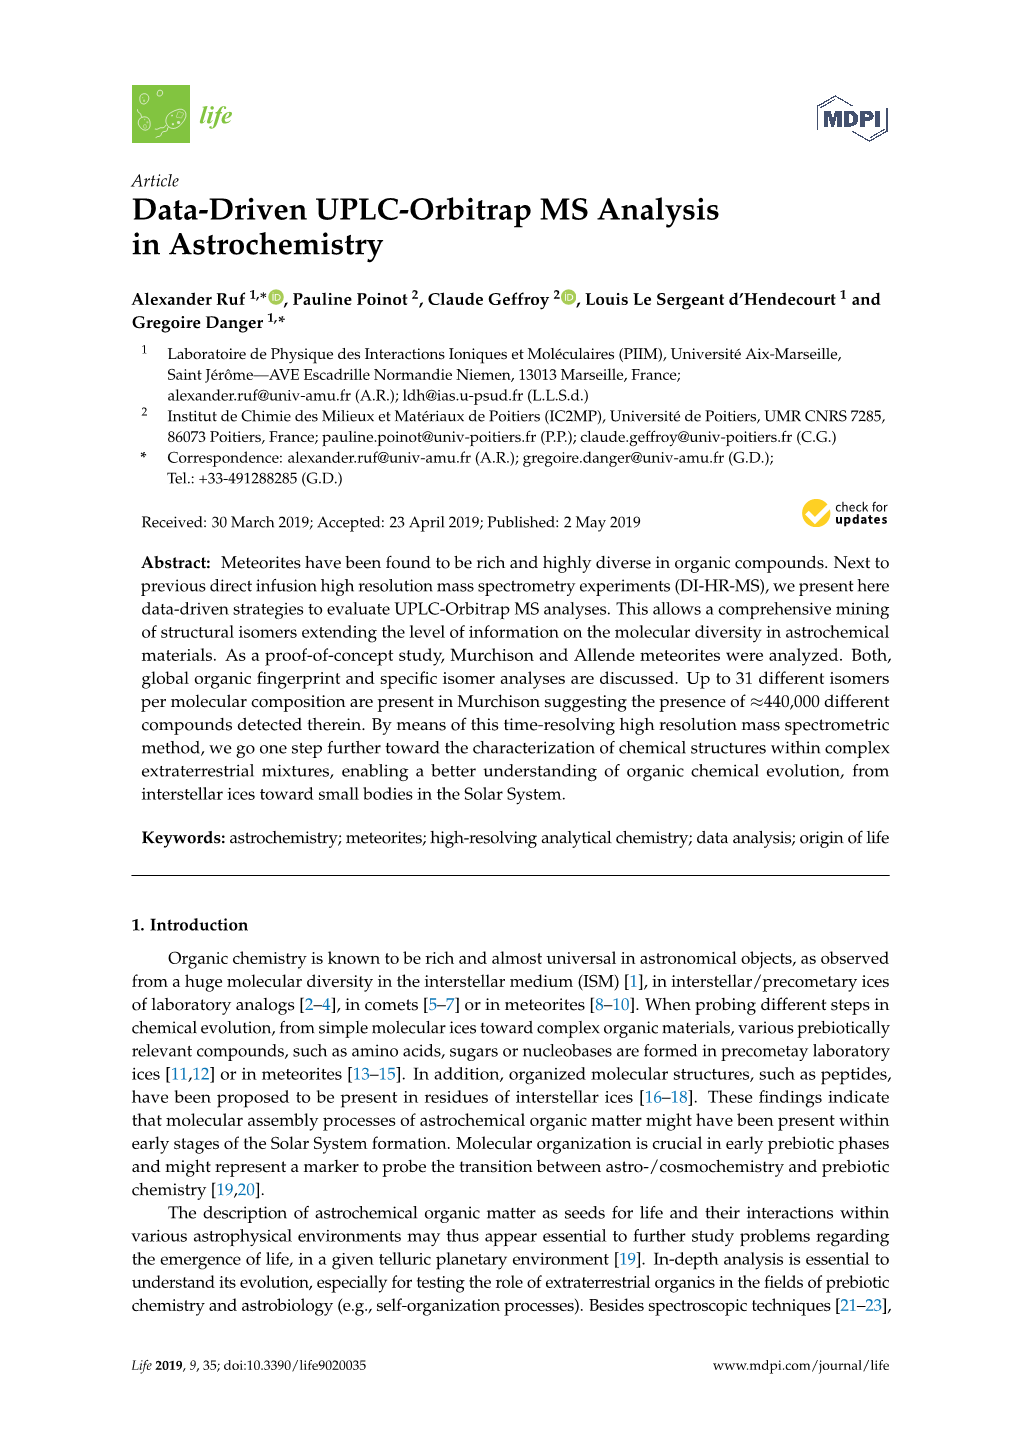 Data-Driven UPLC-Orbitrap MS Analysis in Astrochemistry